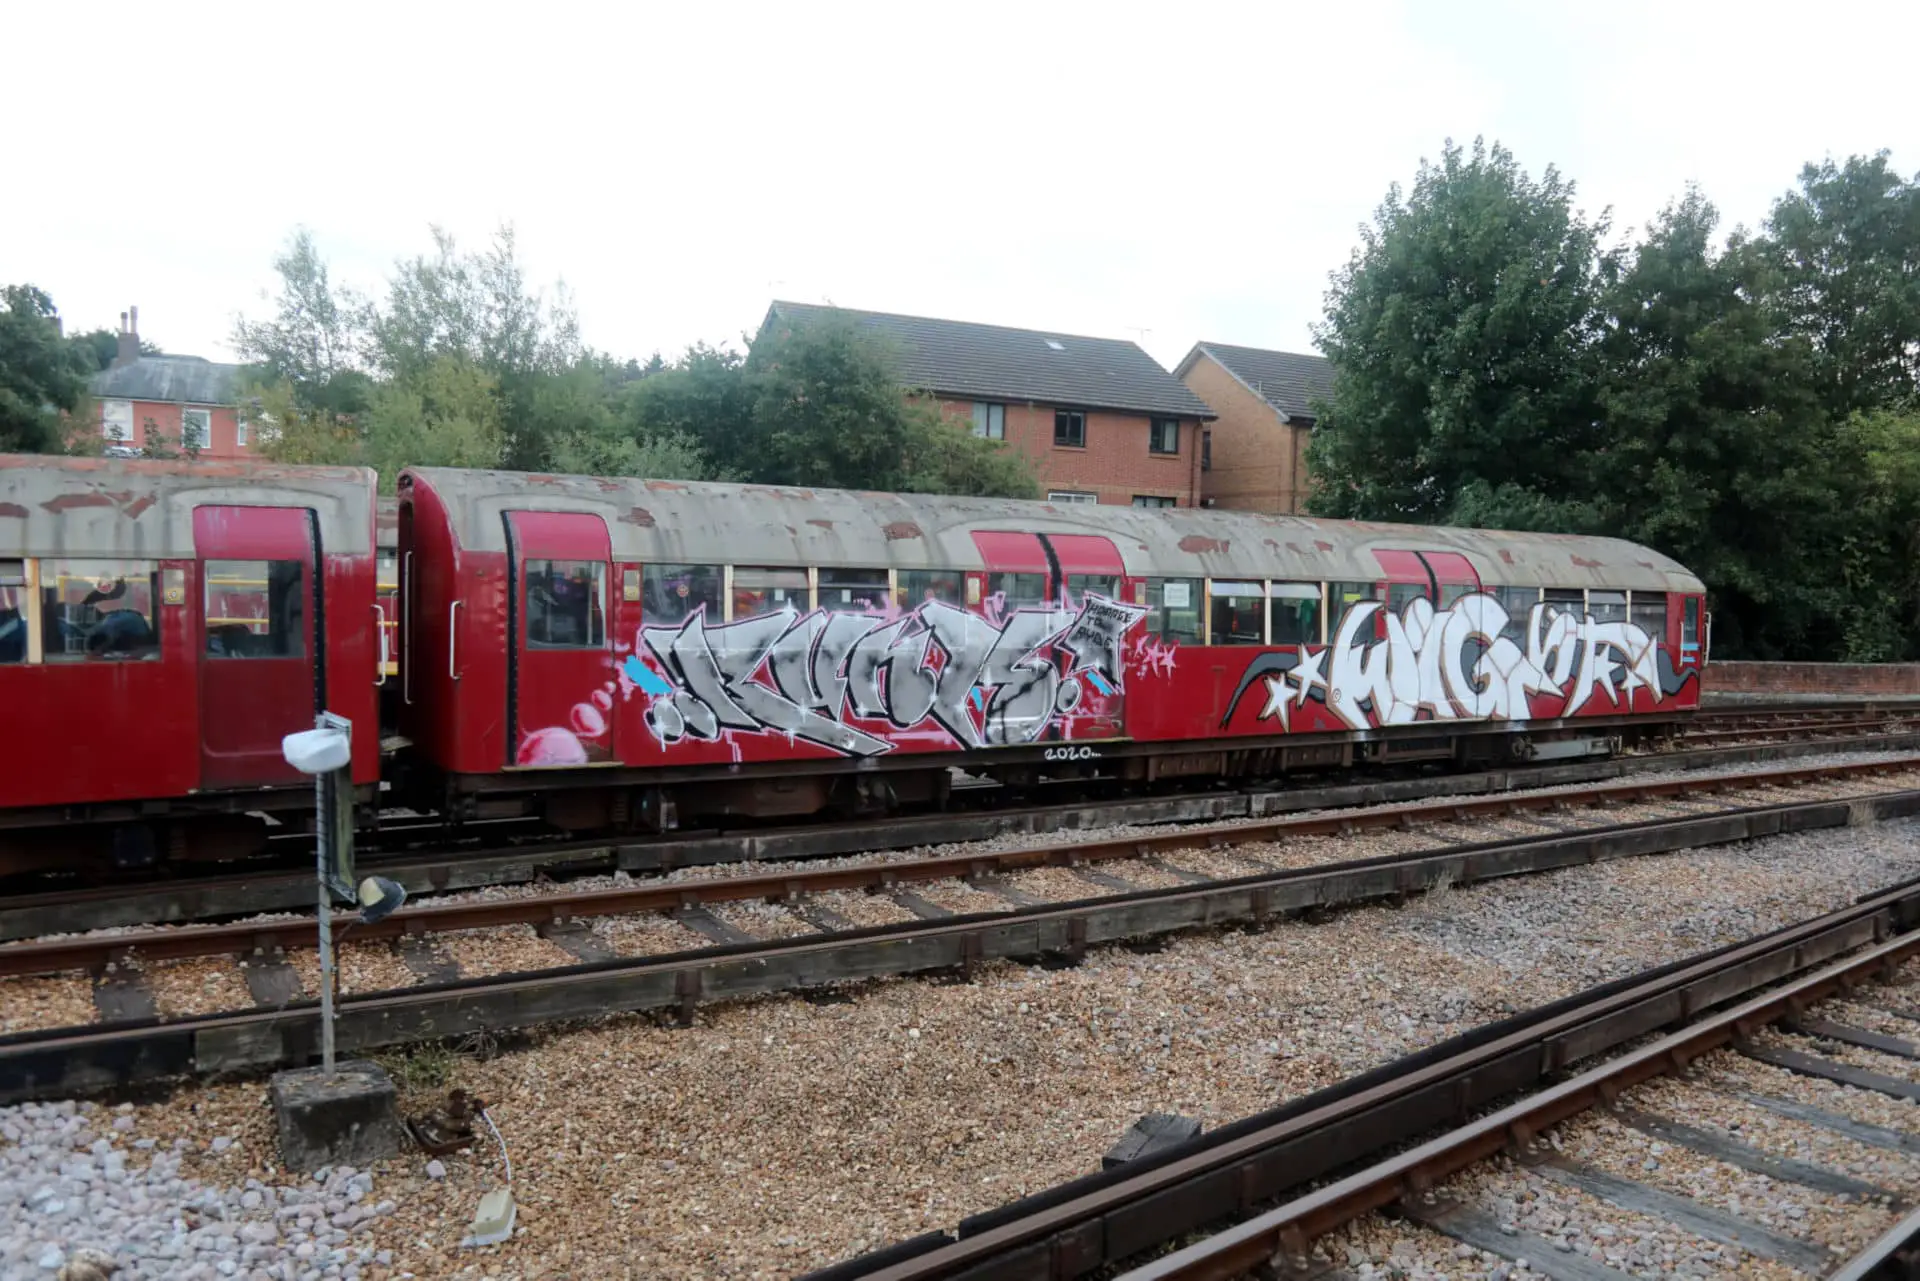 Graffiti covered train by Phil Marsh